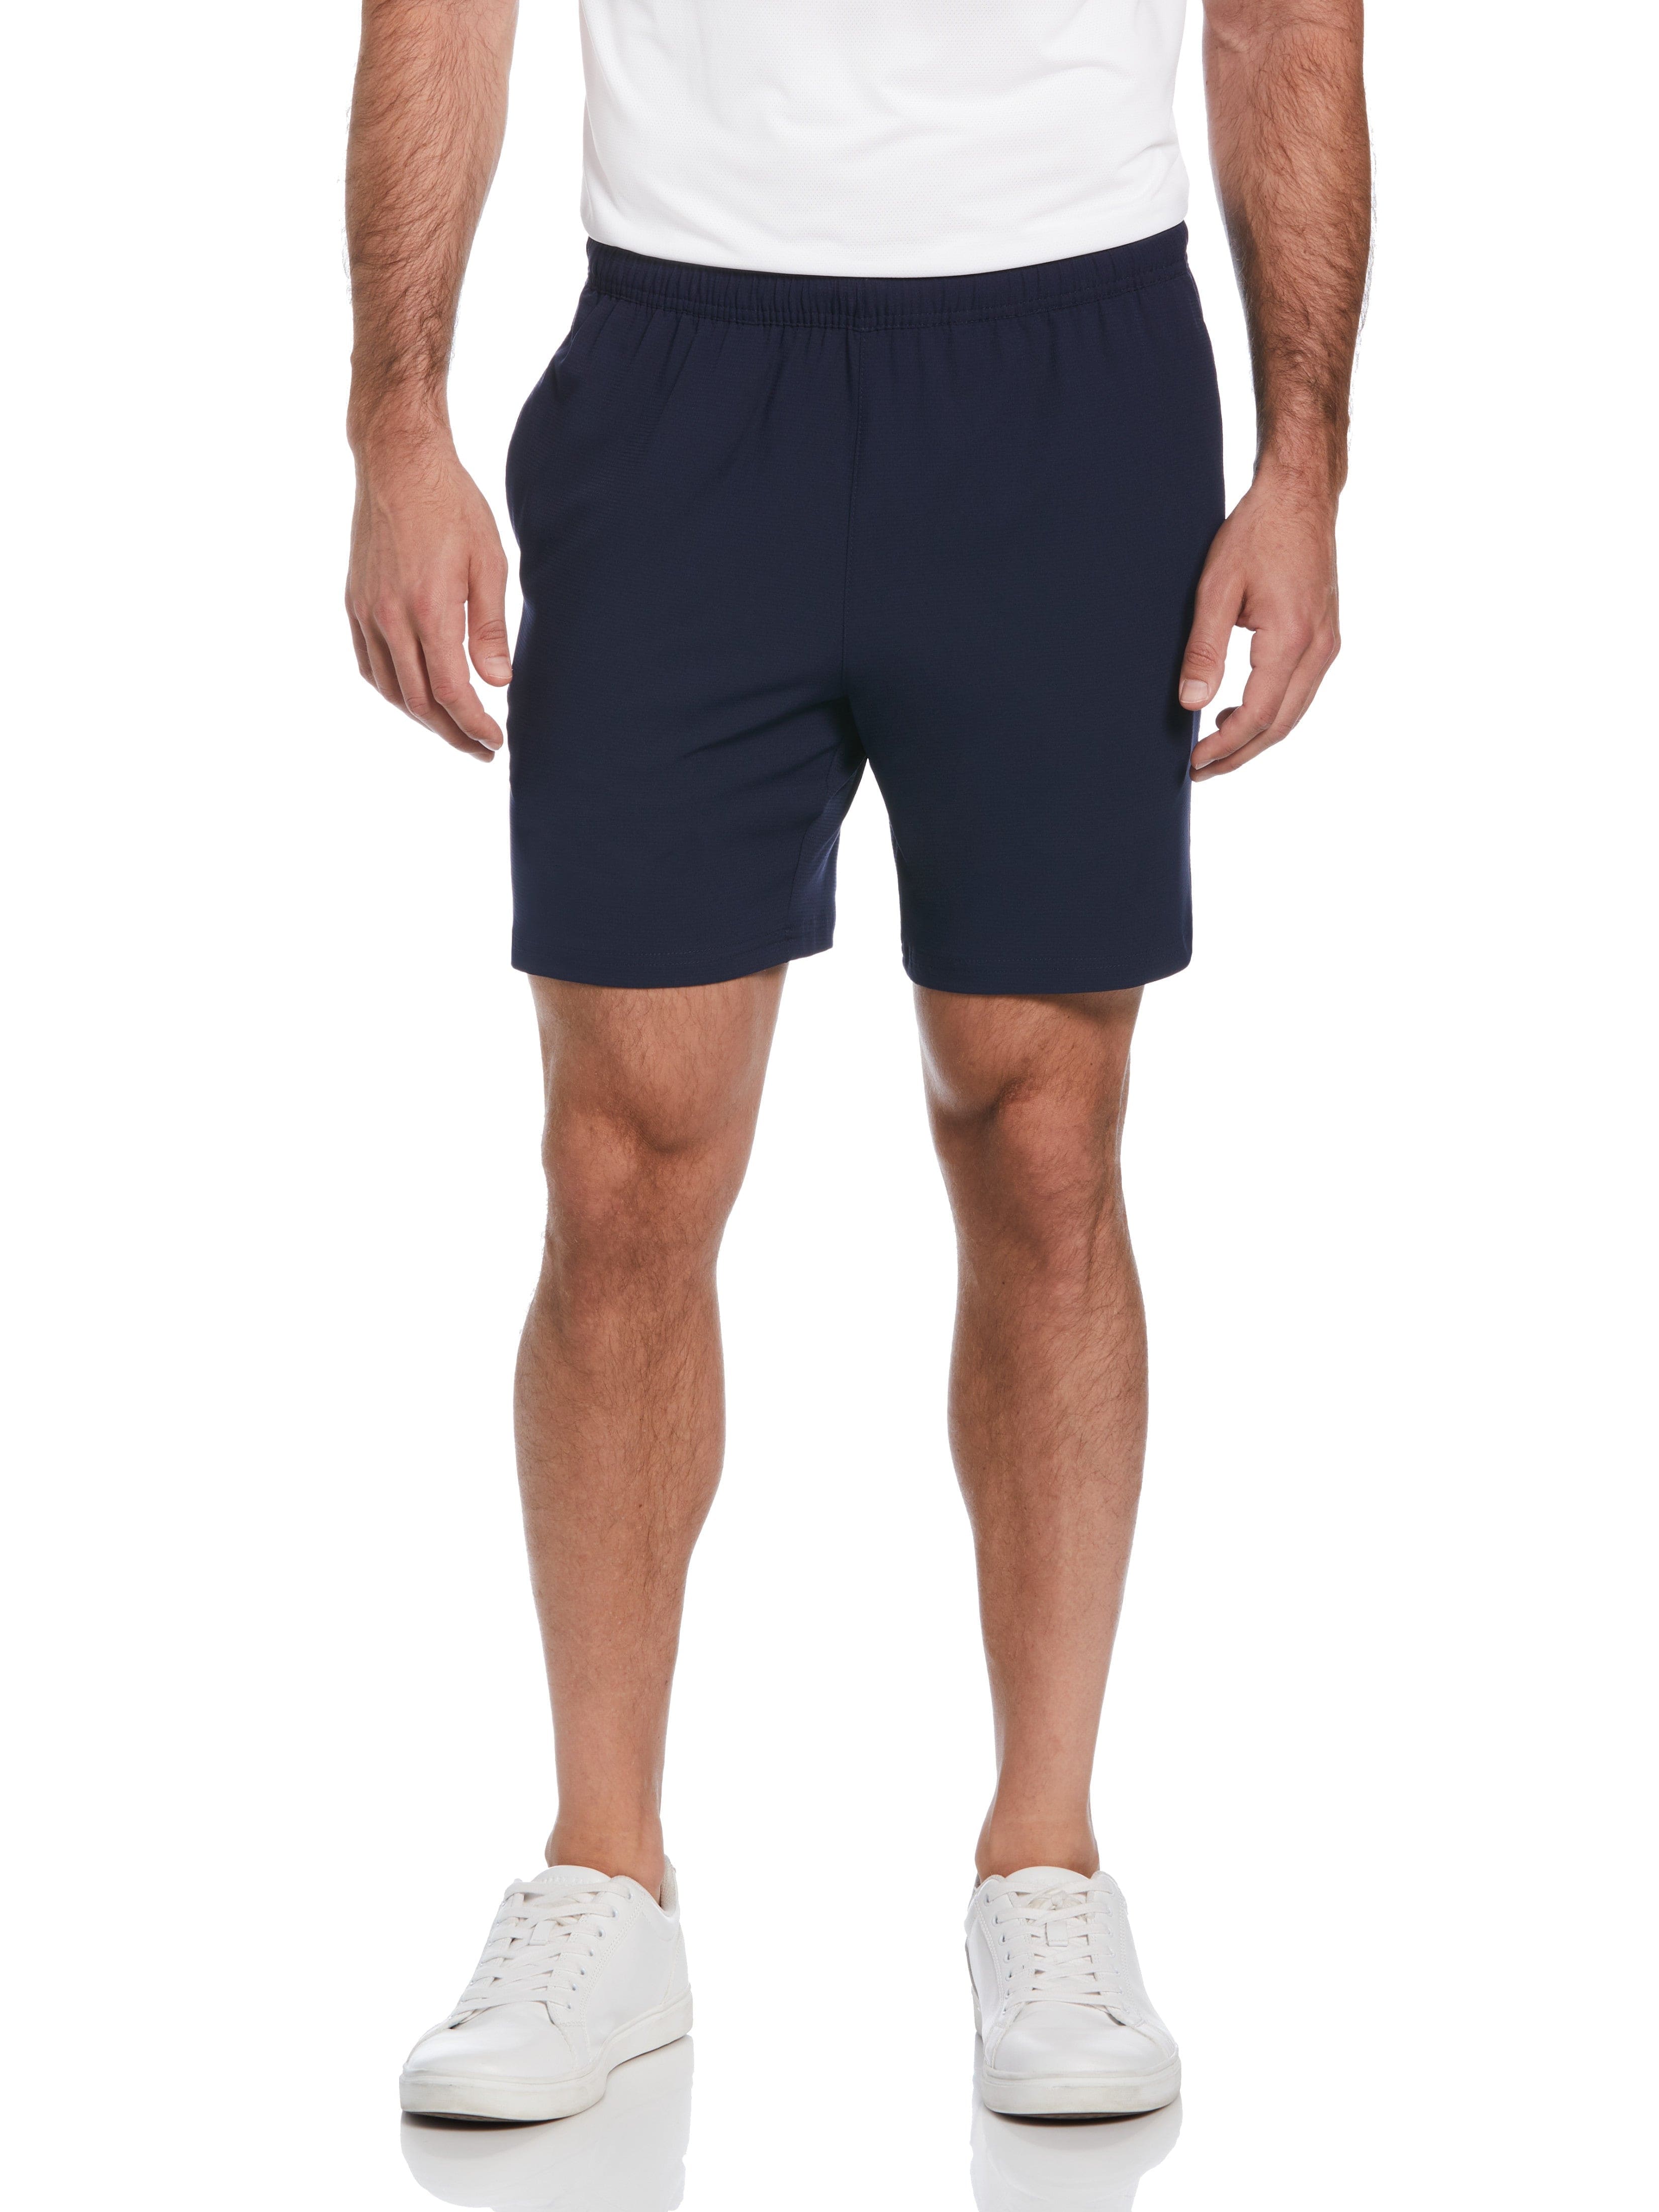 Grand Slam Mens Athletic Tennis Short, Size 2XL, Navy Blue, Polyester/Elastane | Golf Apparel Shop